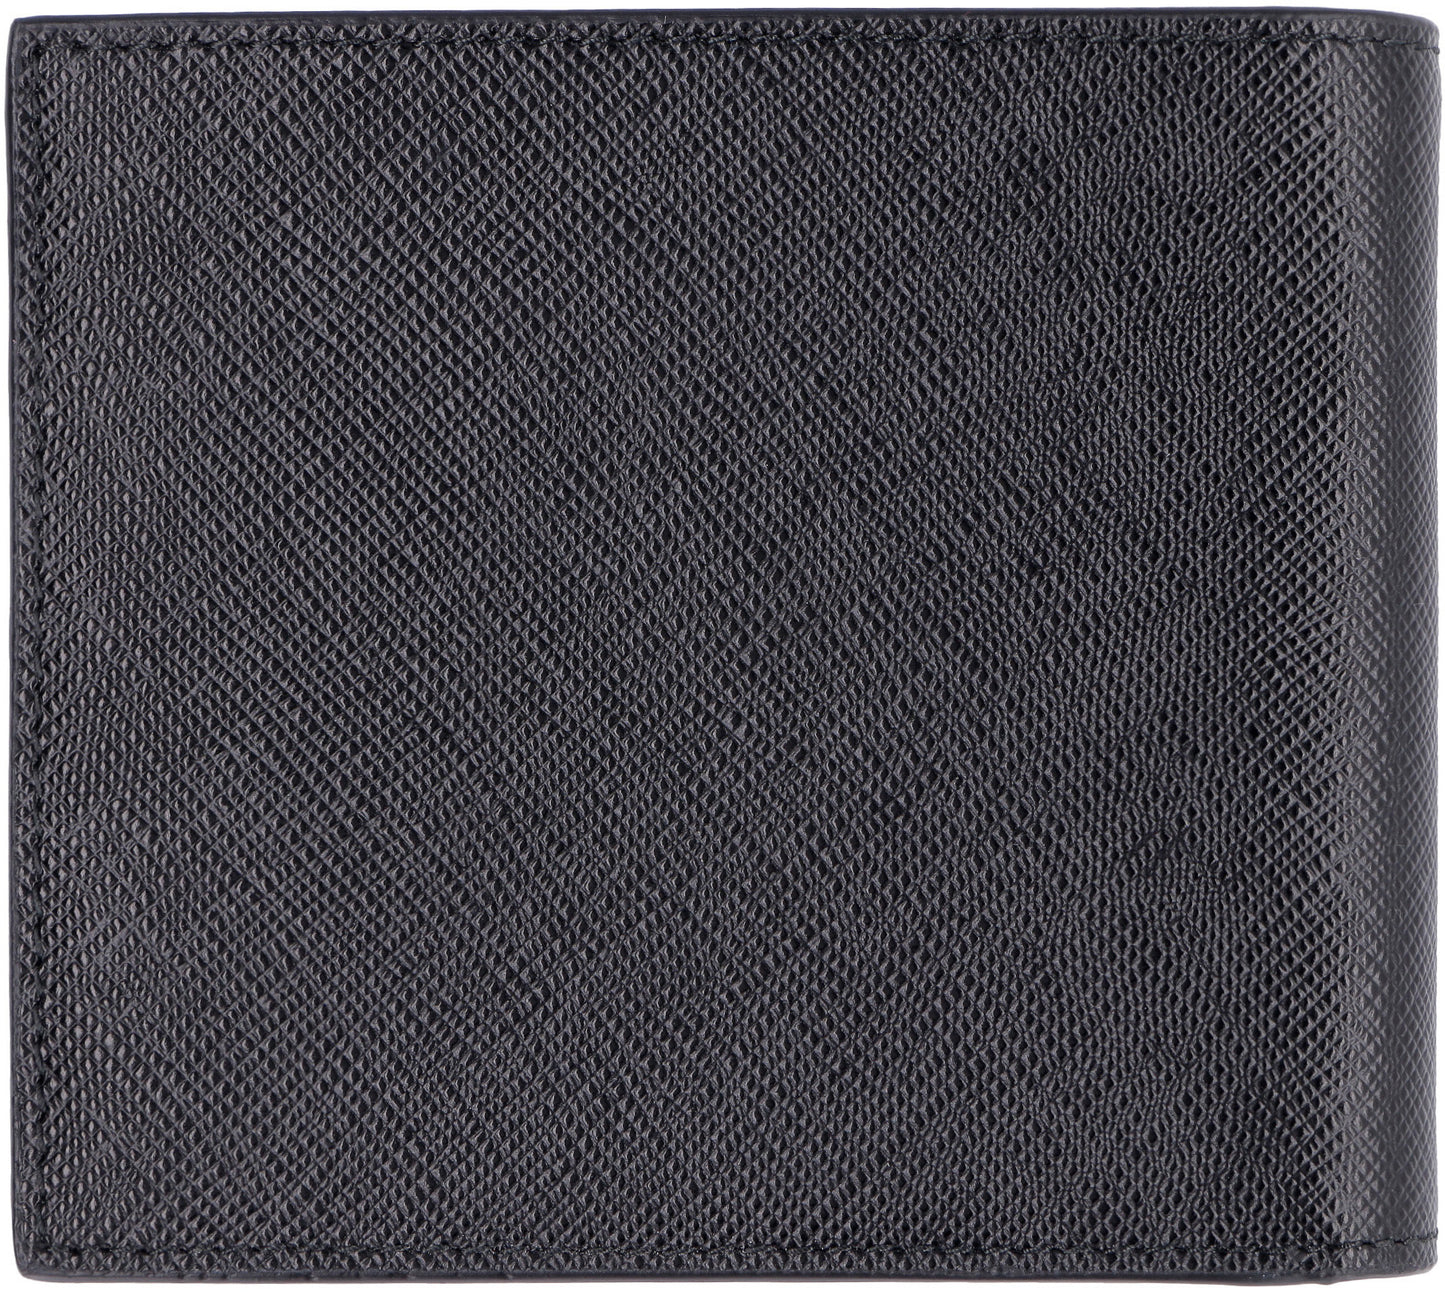 Saffiano Leather Wallet - Black